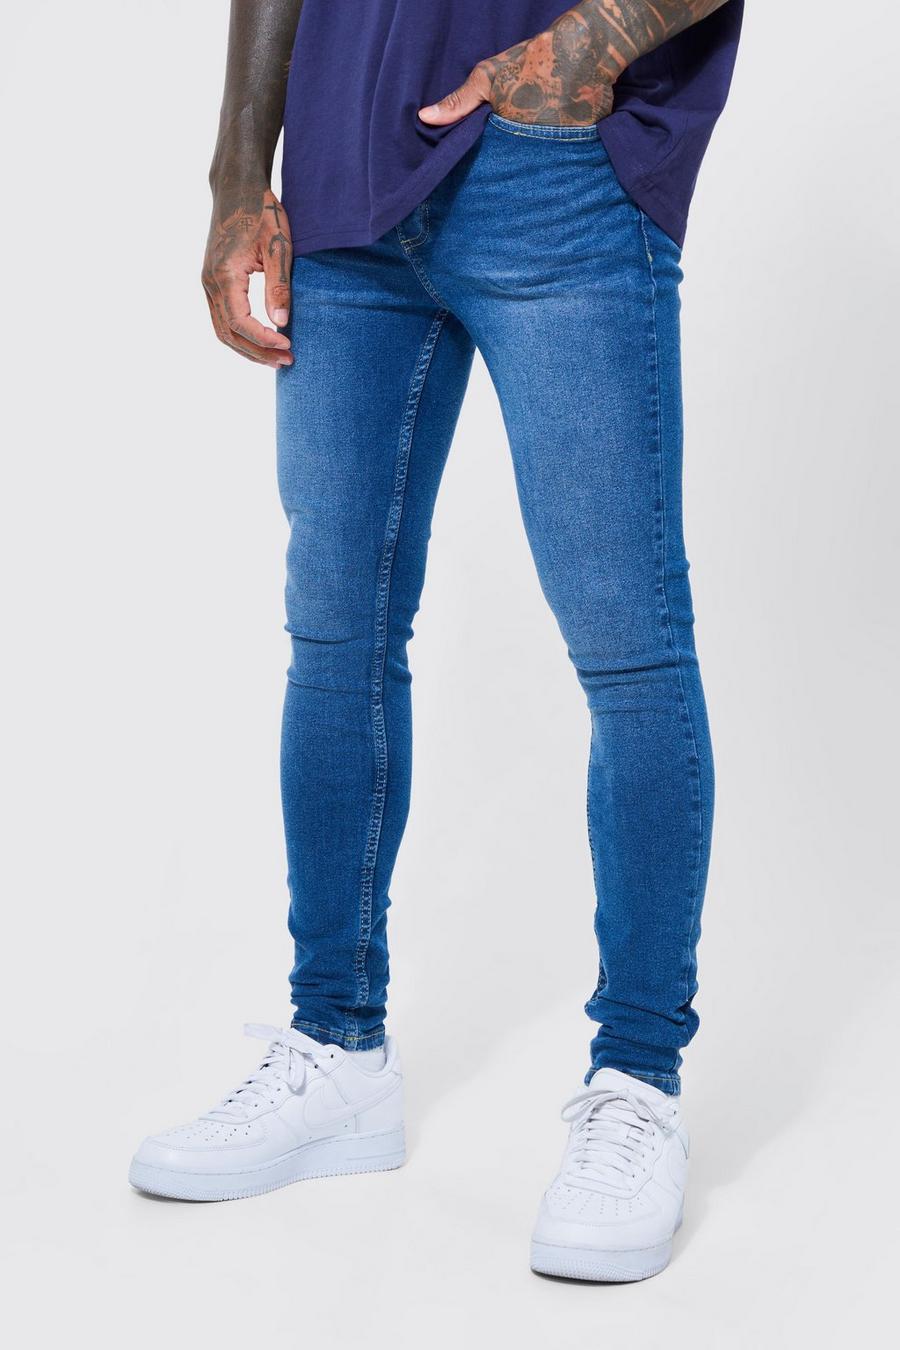 Men's Stretch Jeans, Stretch Skinny Jeans